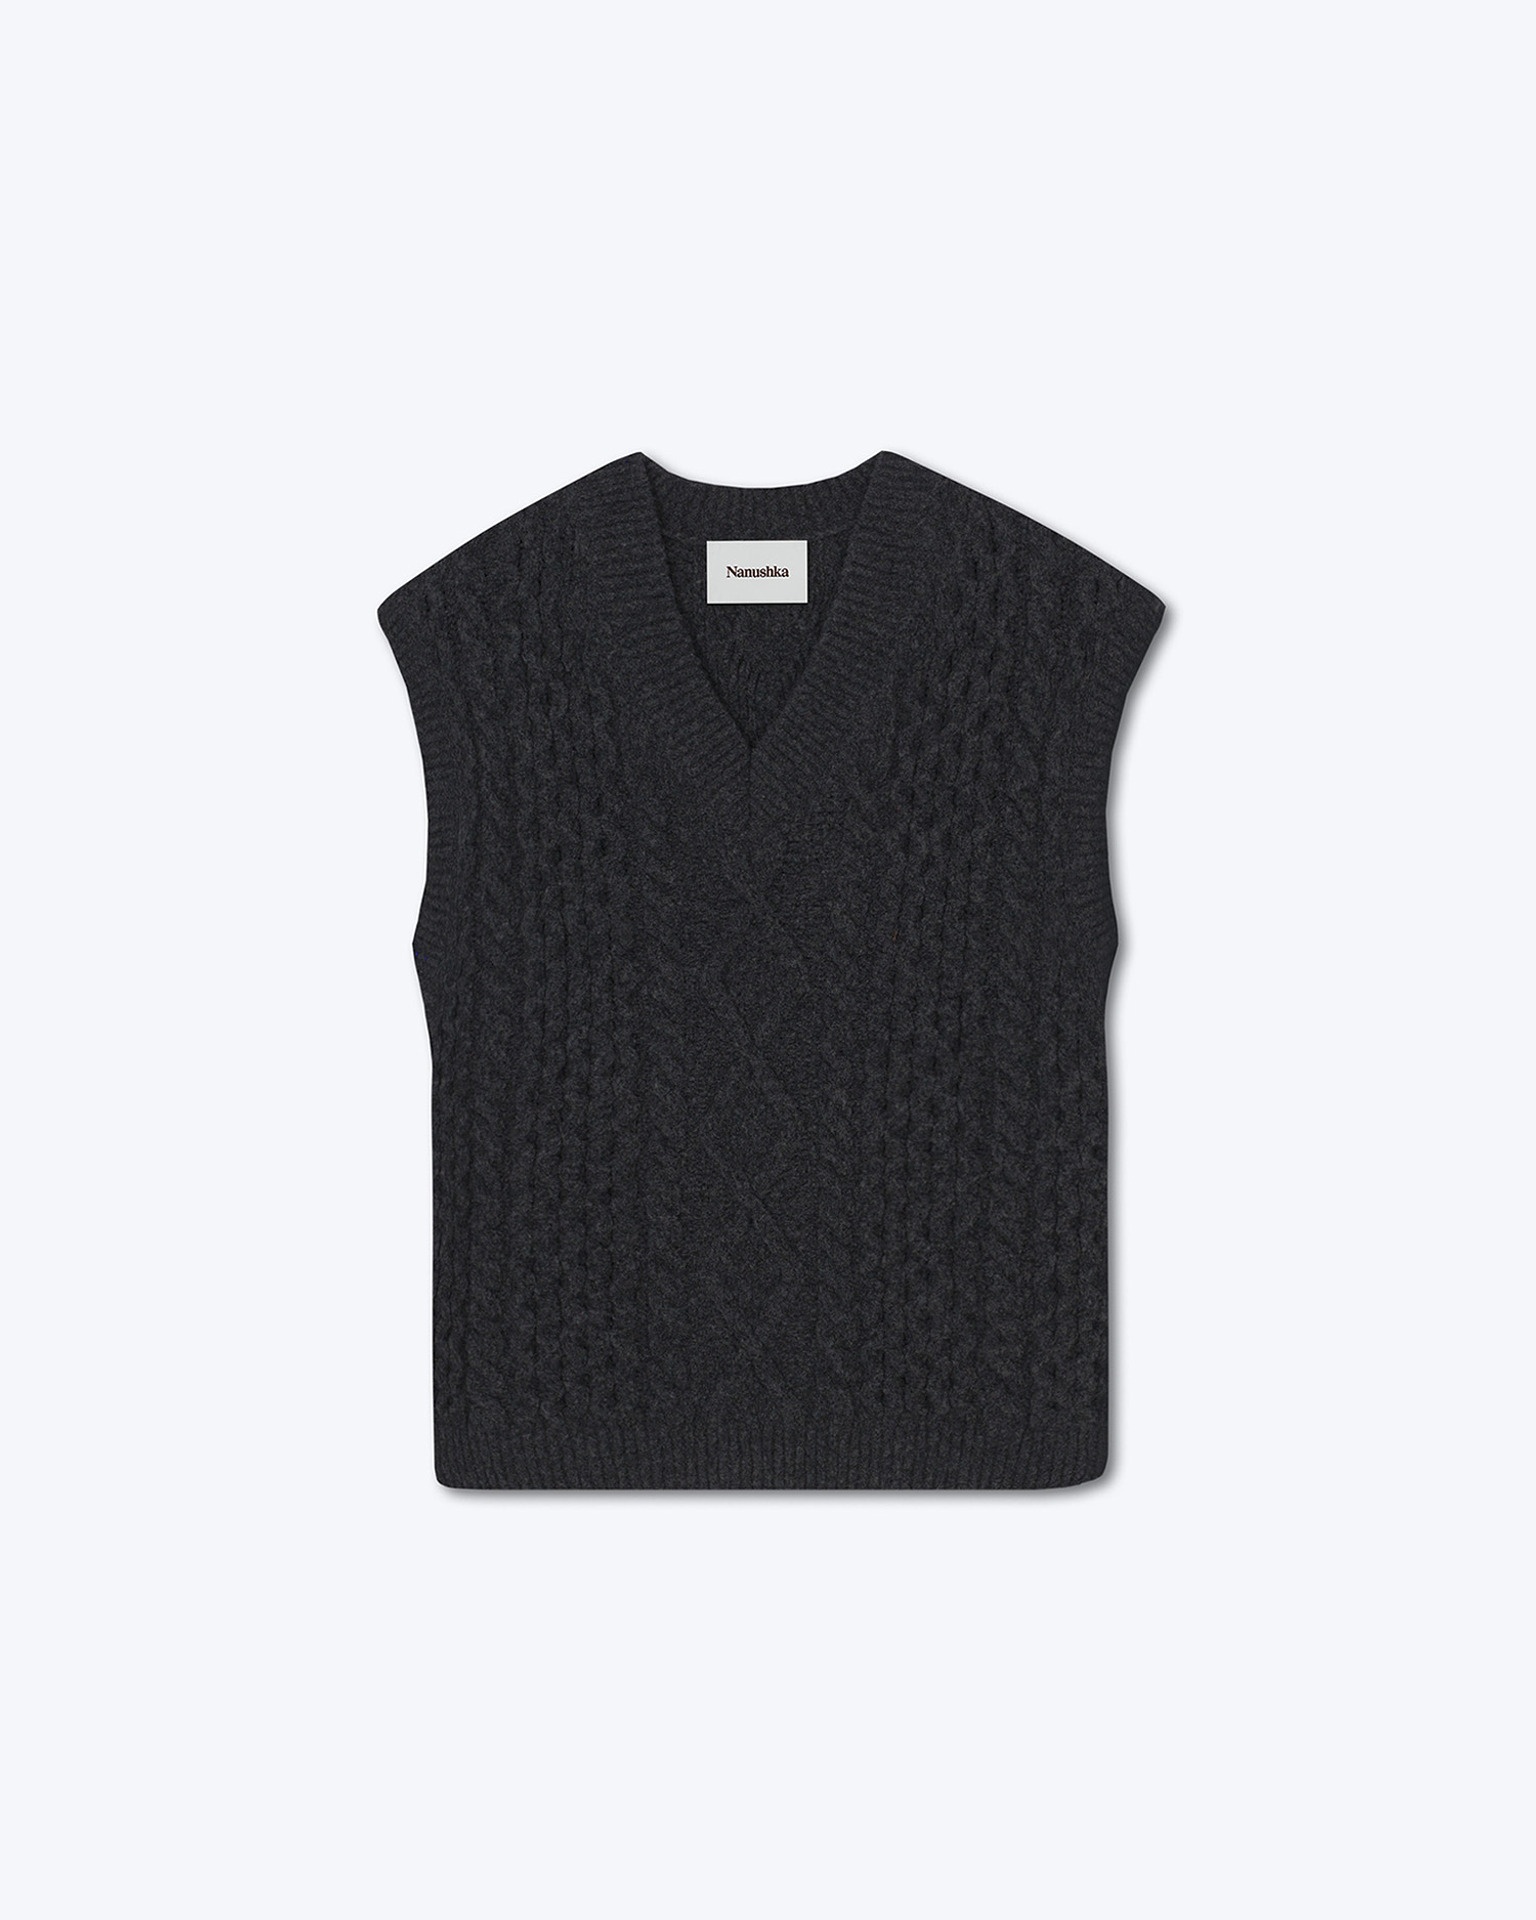 DOAN - Cable knit vest - Charcoal - 1